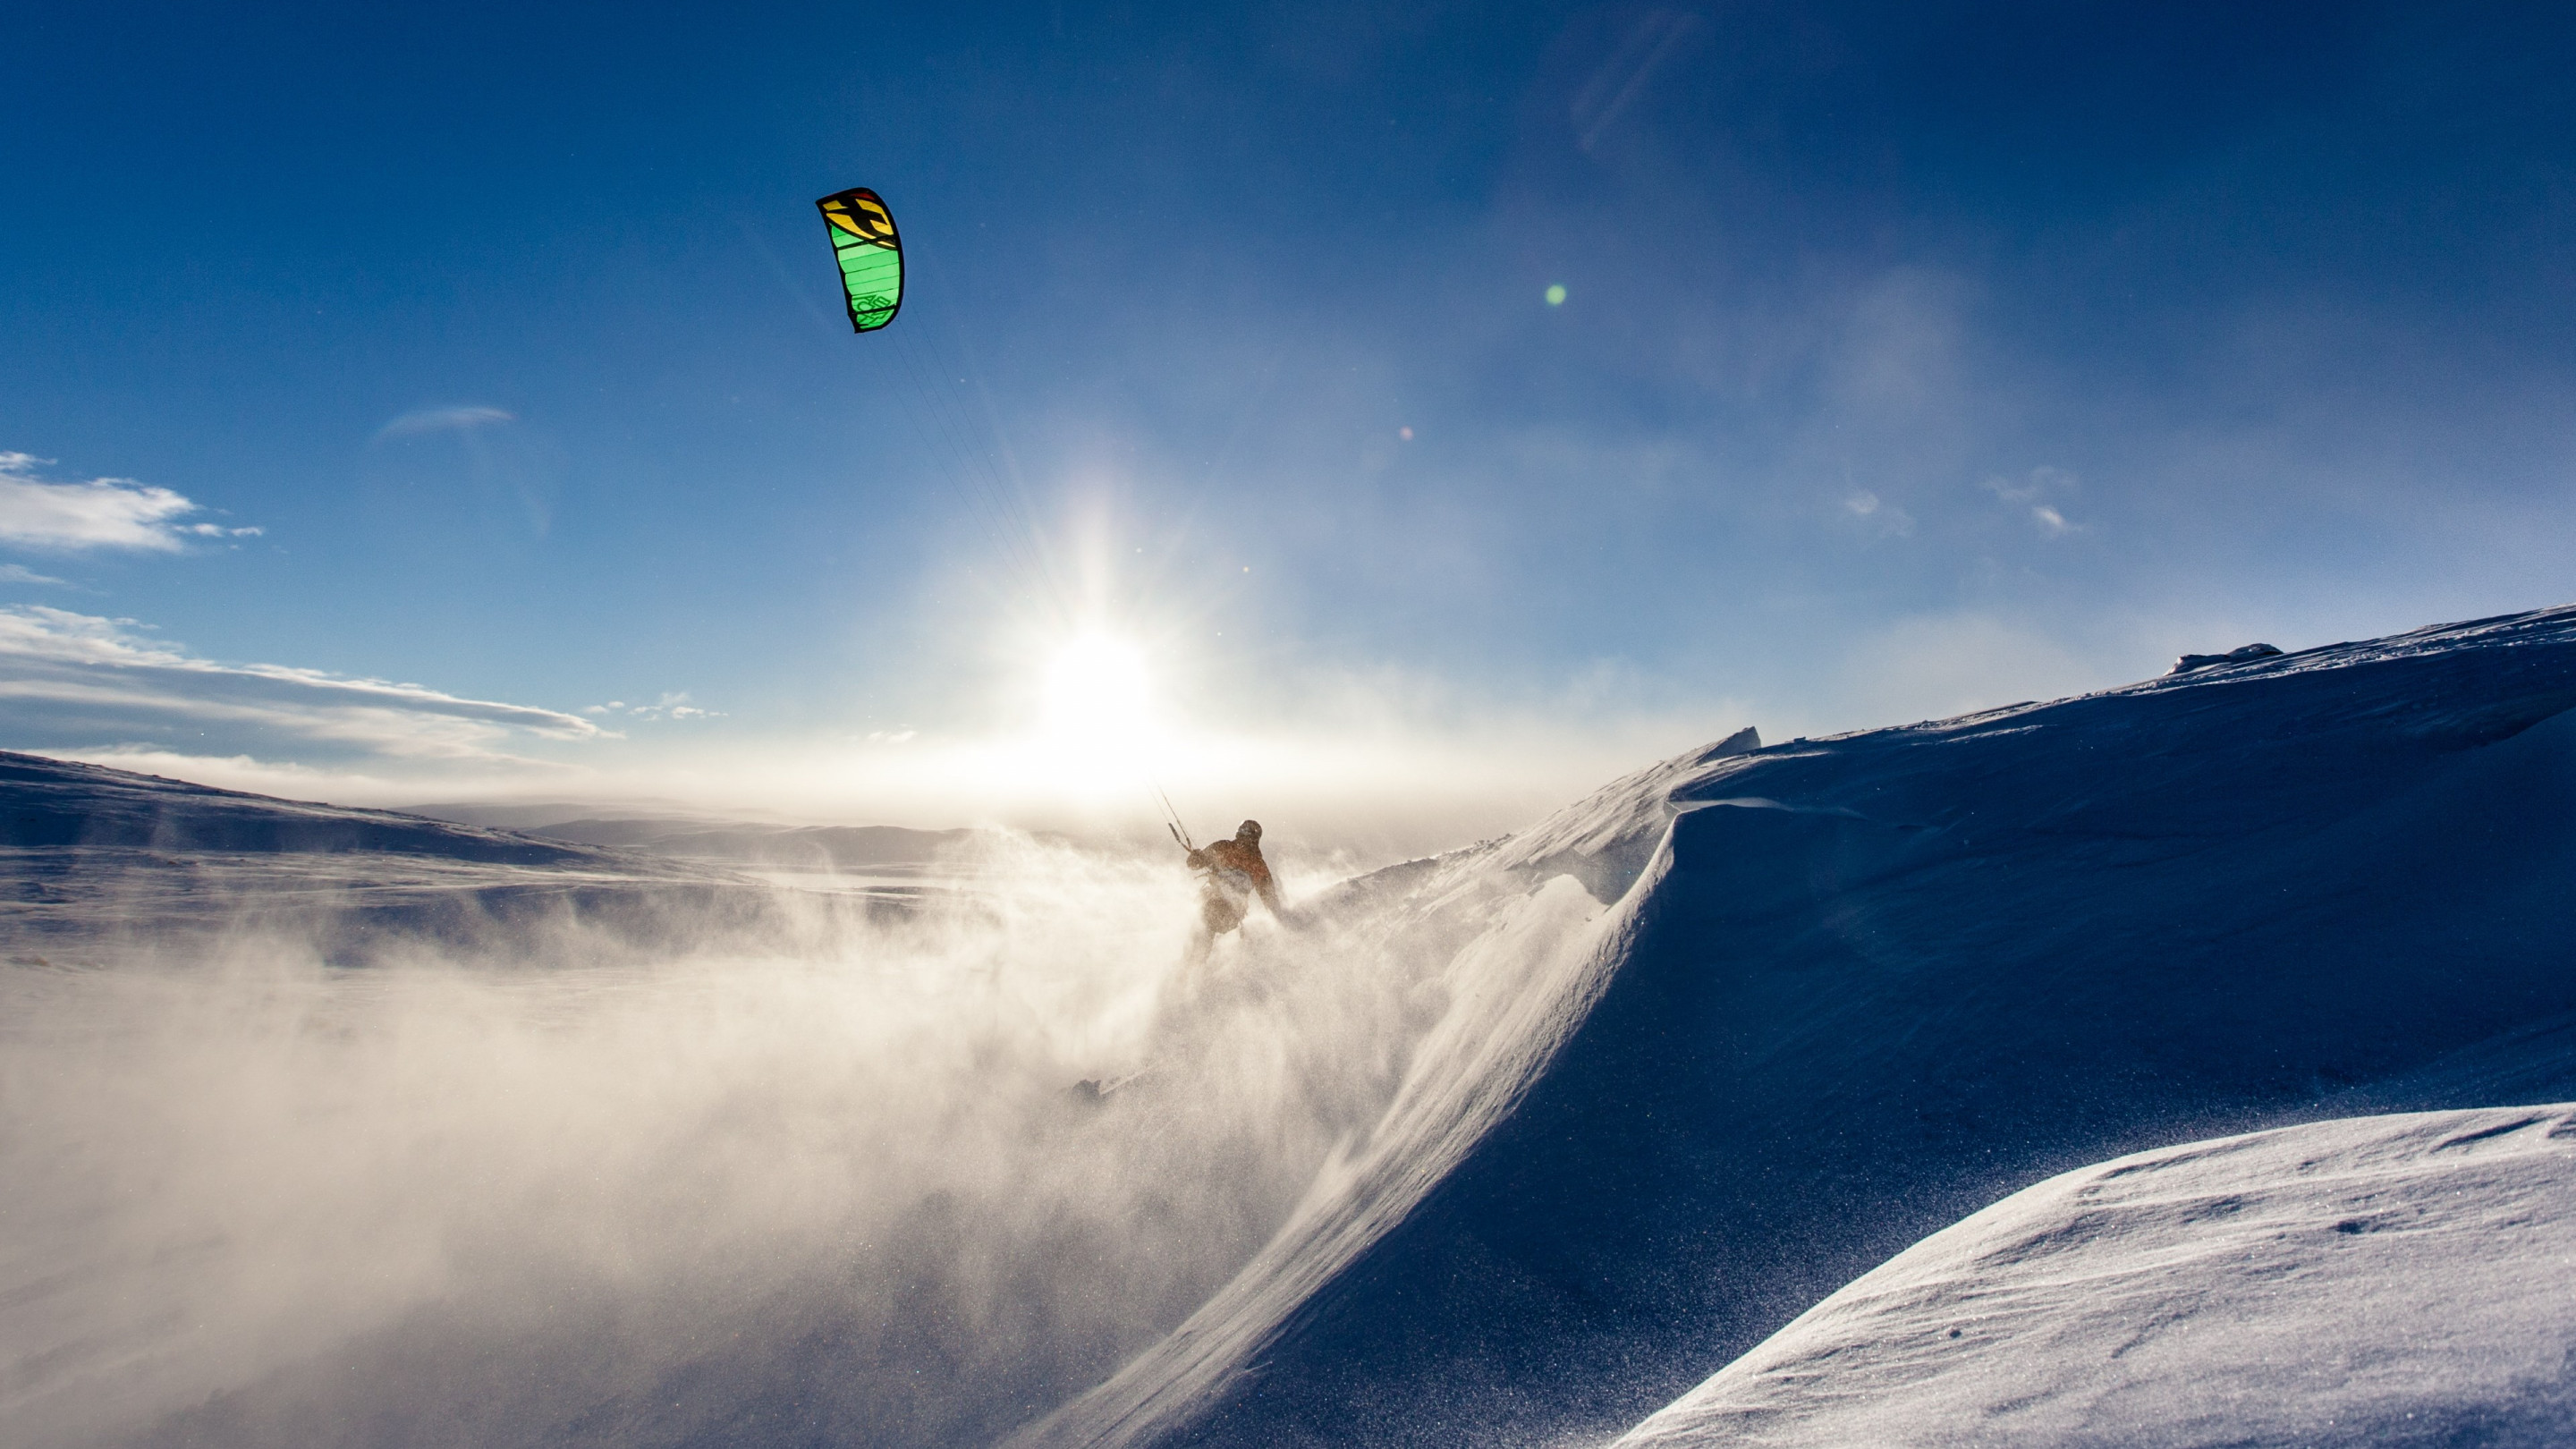 Kiteboarder on snow wallpaper 2880x1620